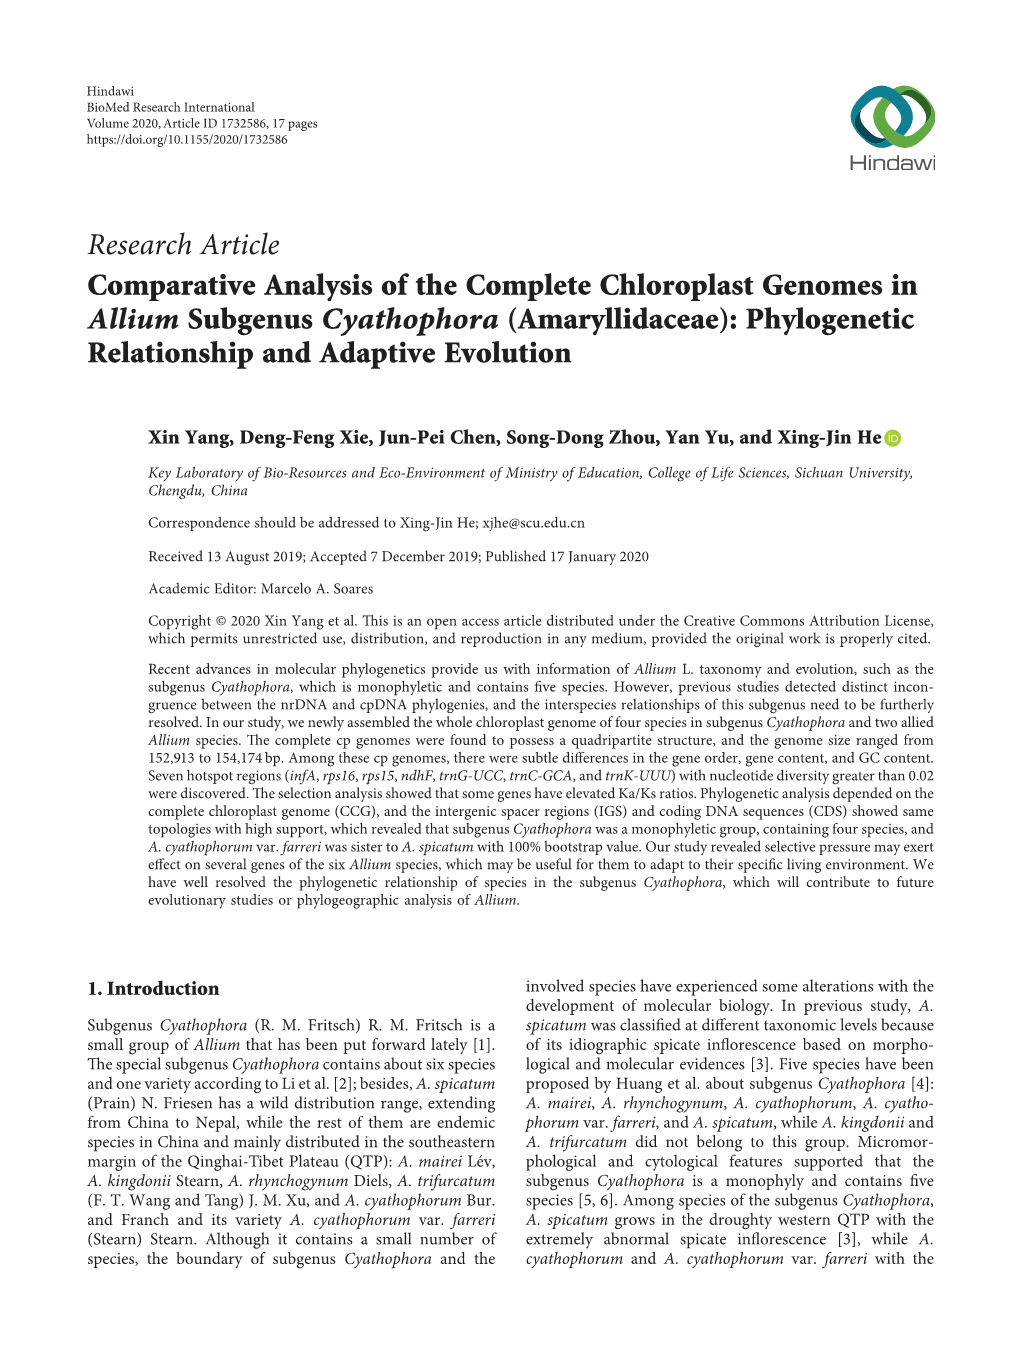 Comparative Analysis of the Complete Chloroplast Genomes in Allium Subgenus Cyathophora (Amaryllidaceae): Phylogenetic Relationship and Adaptive Evolution